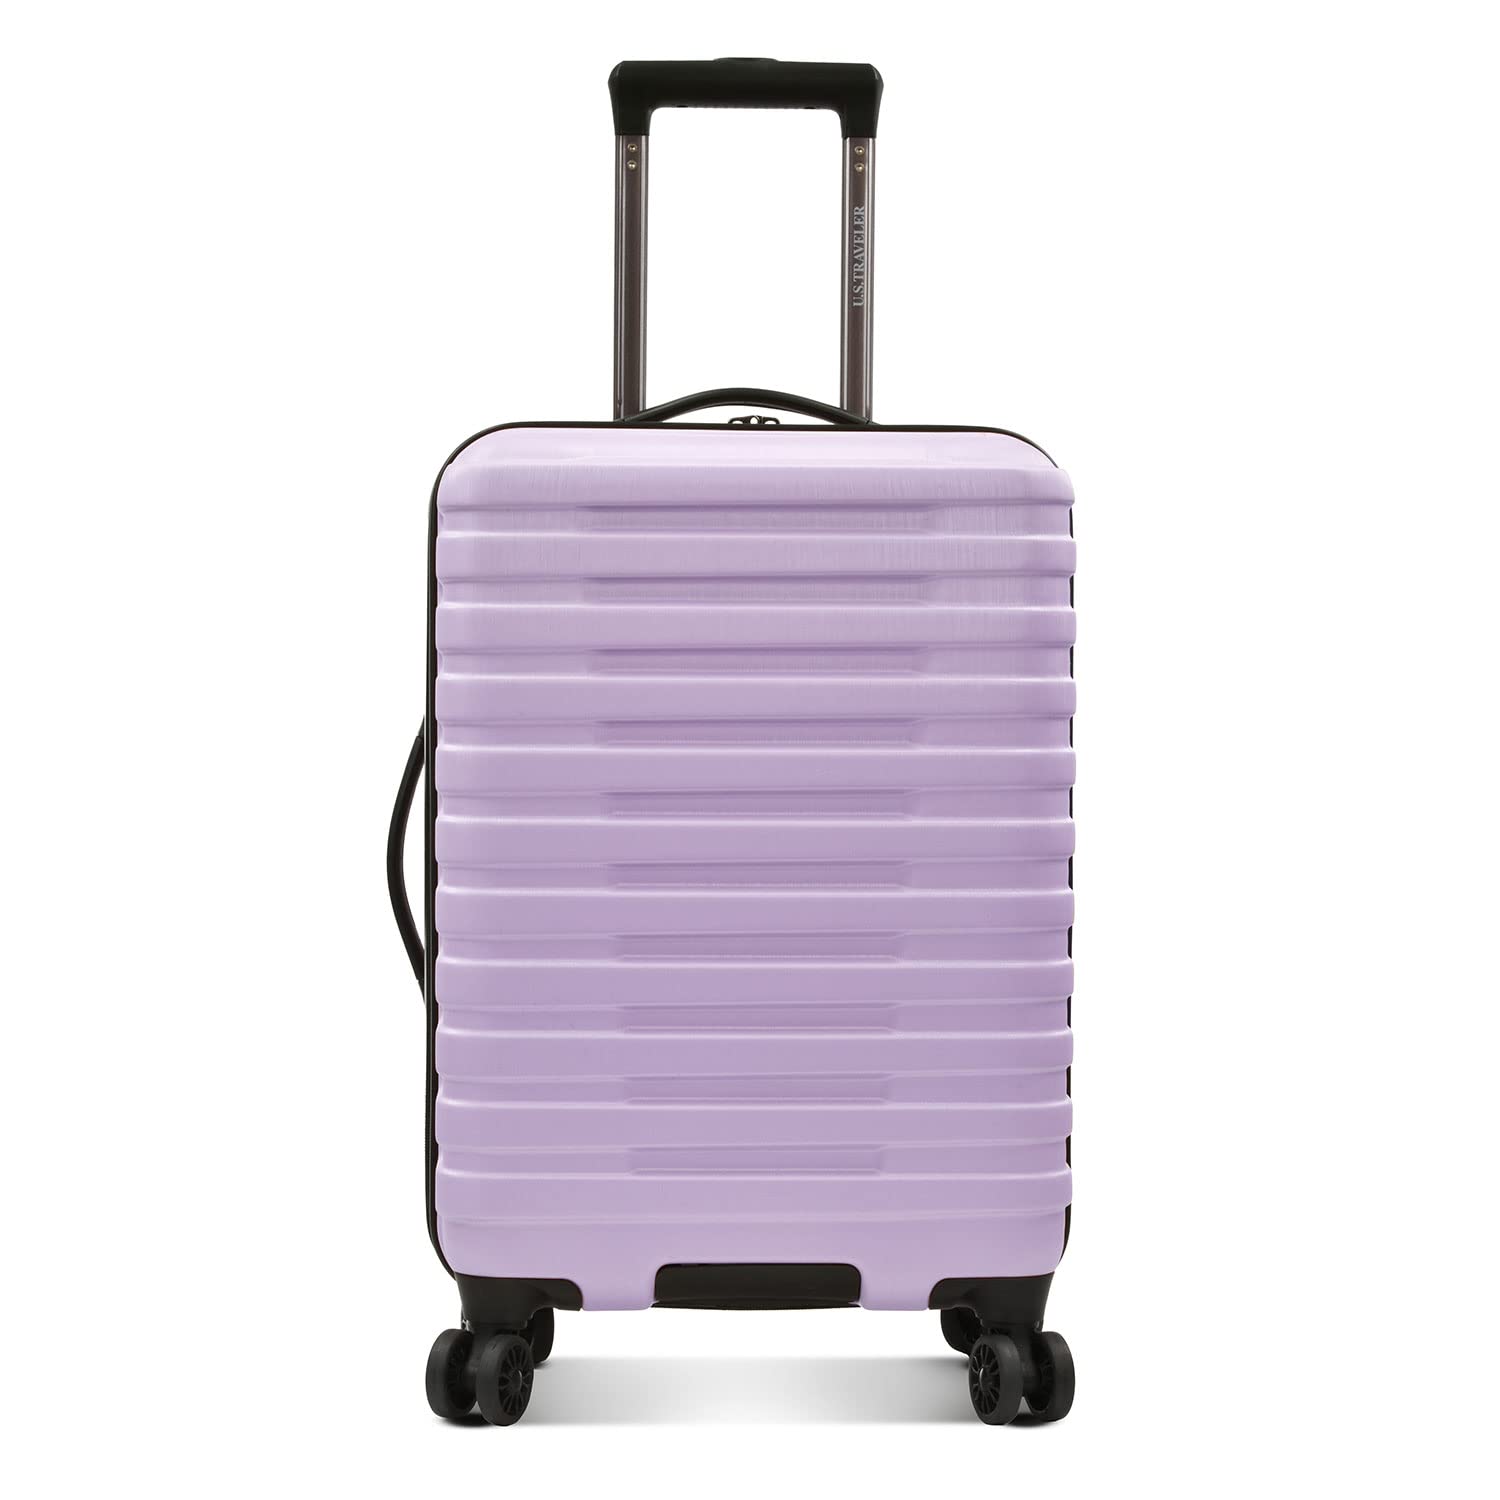 US Traveler Boren Polycarbonate Hardside Rugged Travel Suitcase Luggage with 8 Spinner Wheels, Aluminum Handle, Lavender, carry-